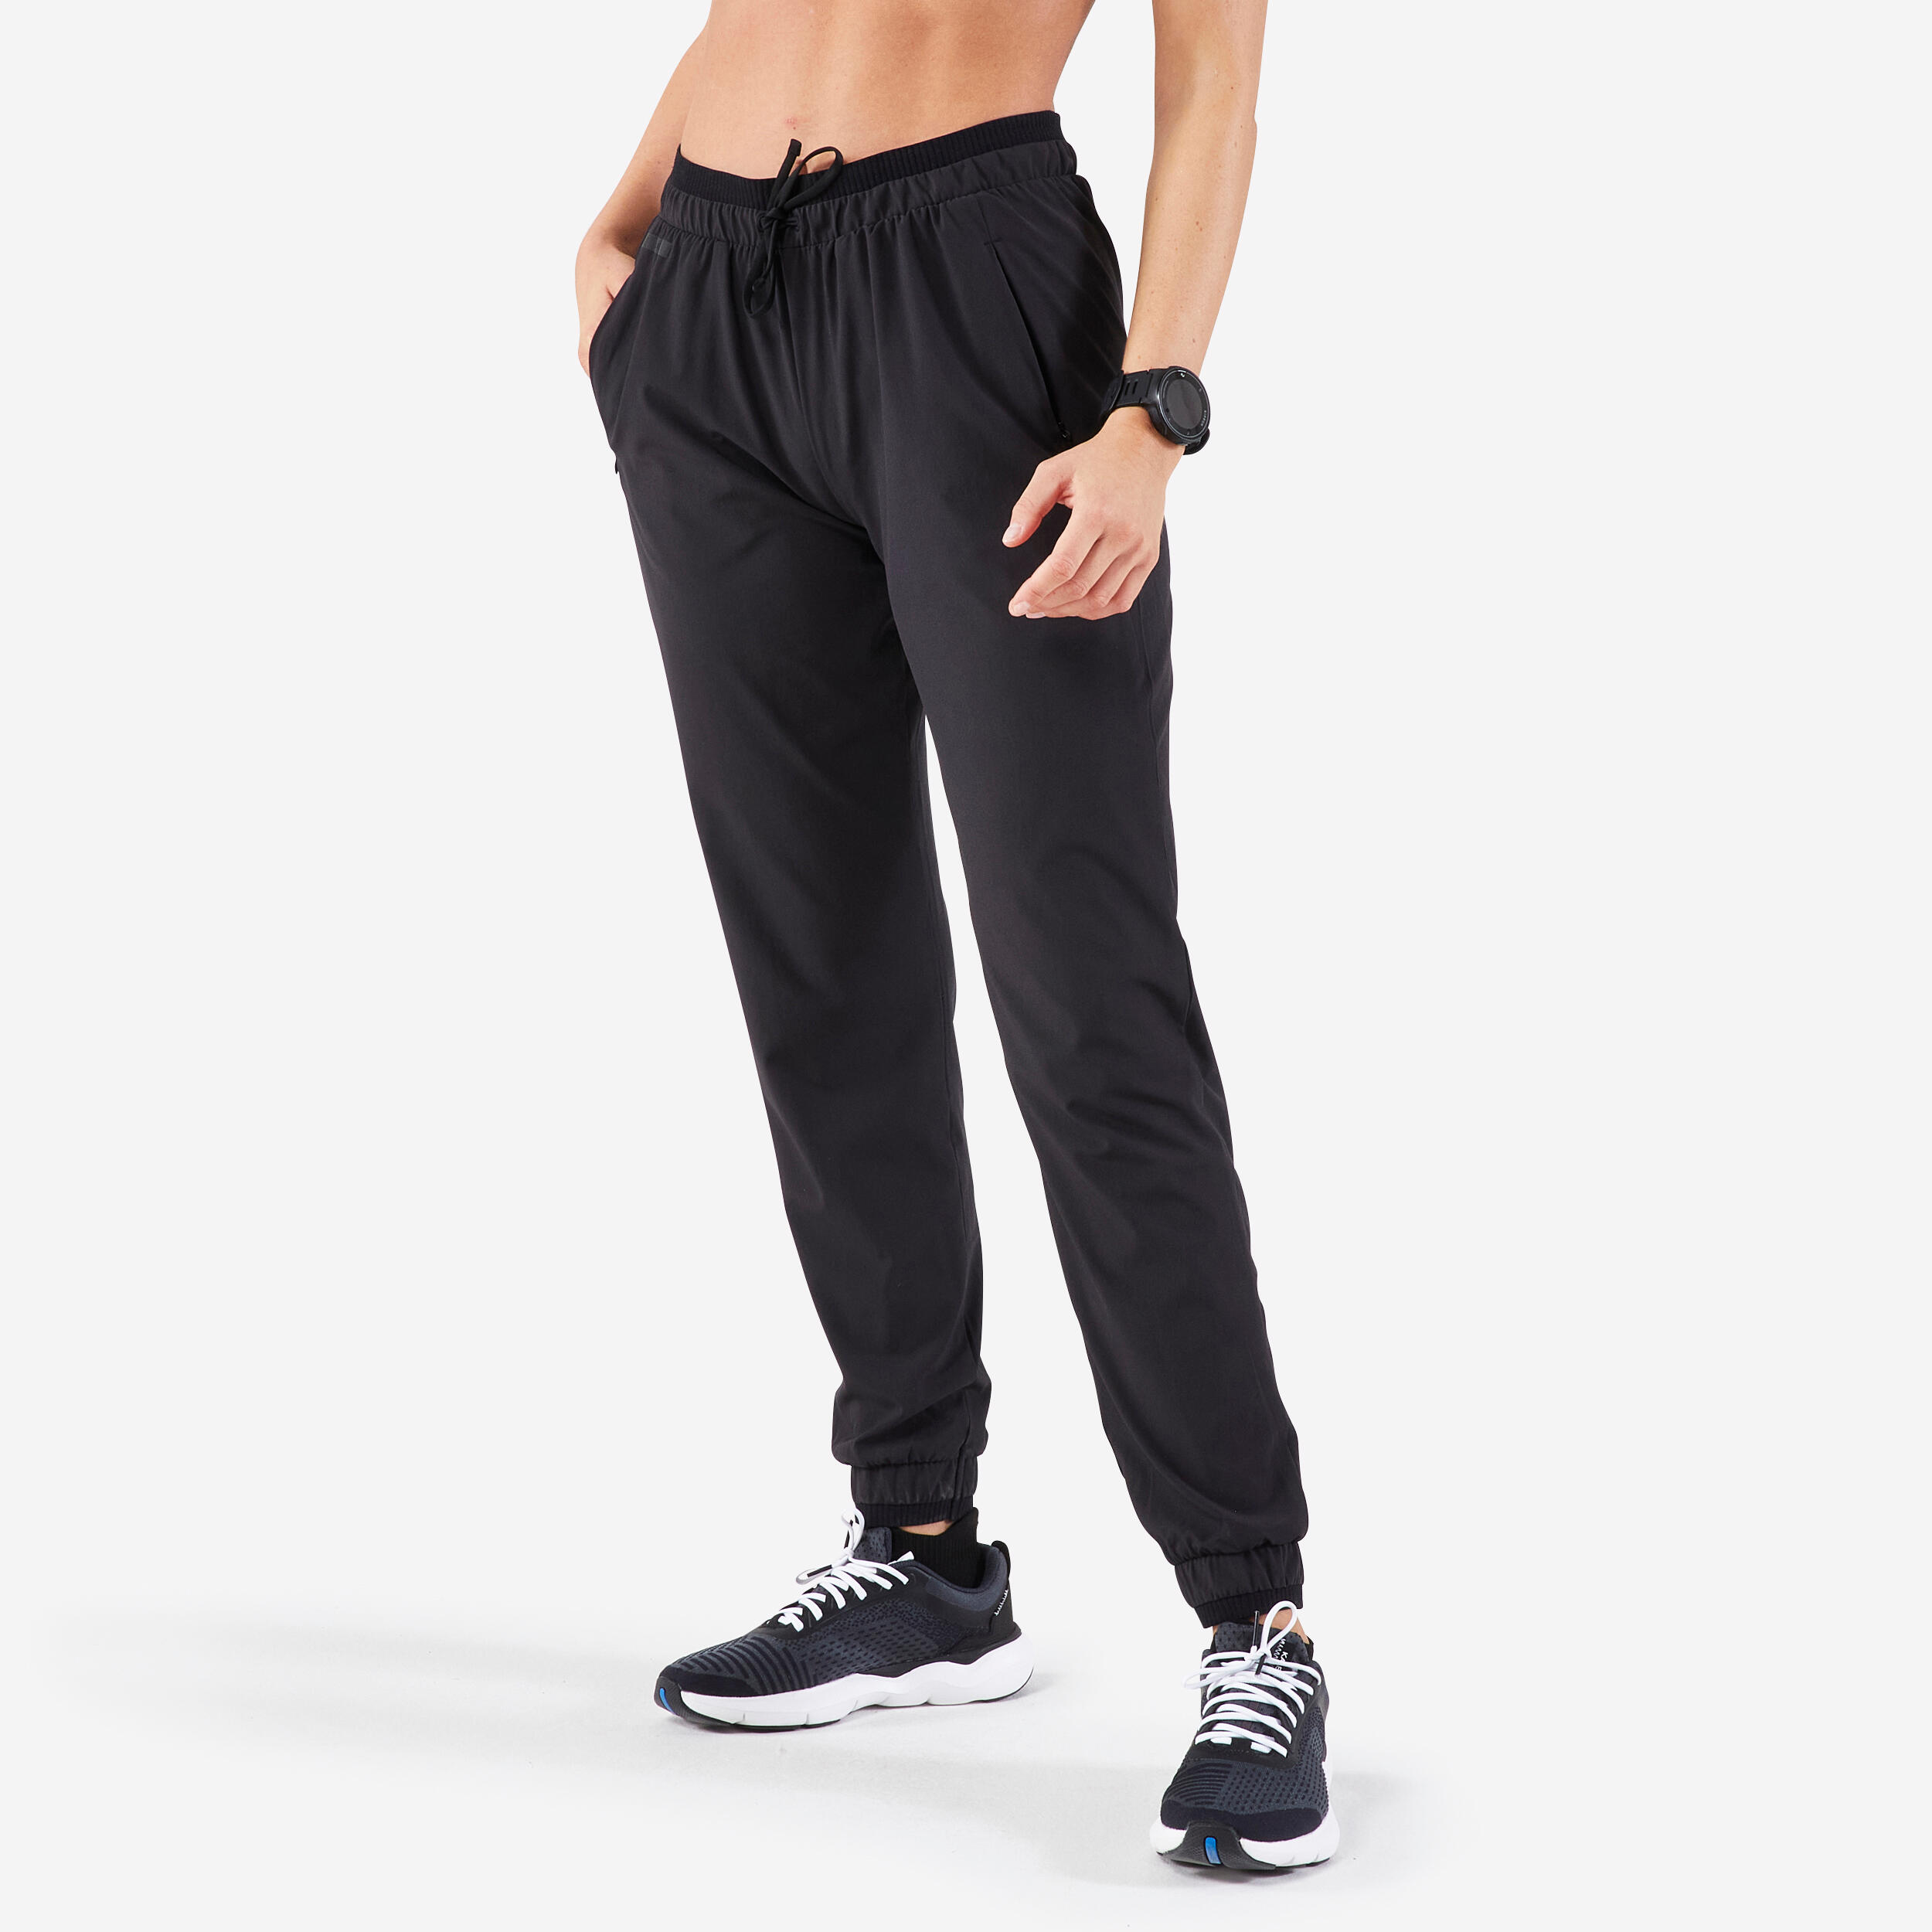 pantalon de jogging running respirant femme - dry noir - kalenji